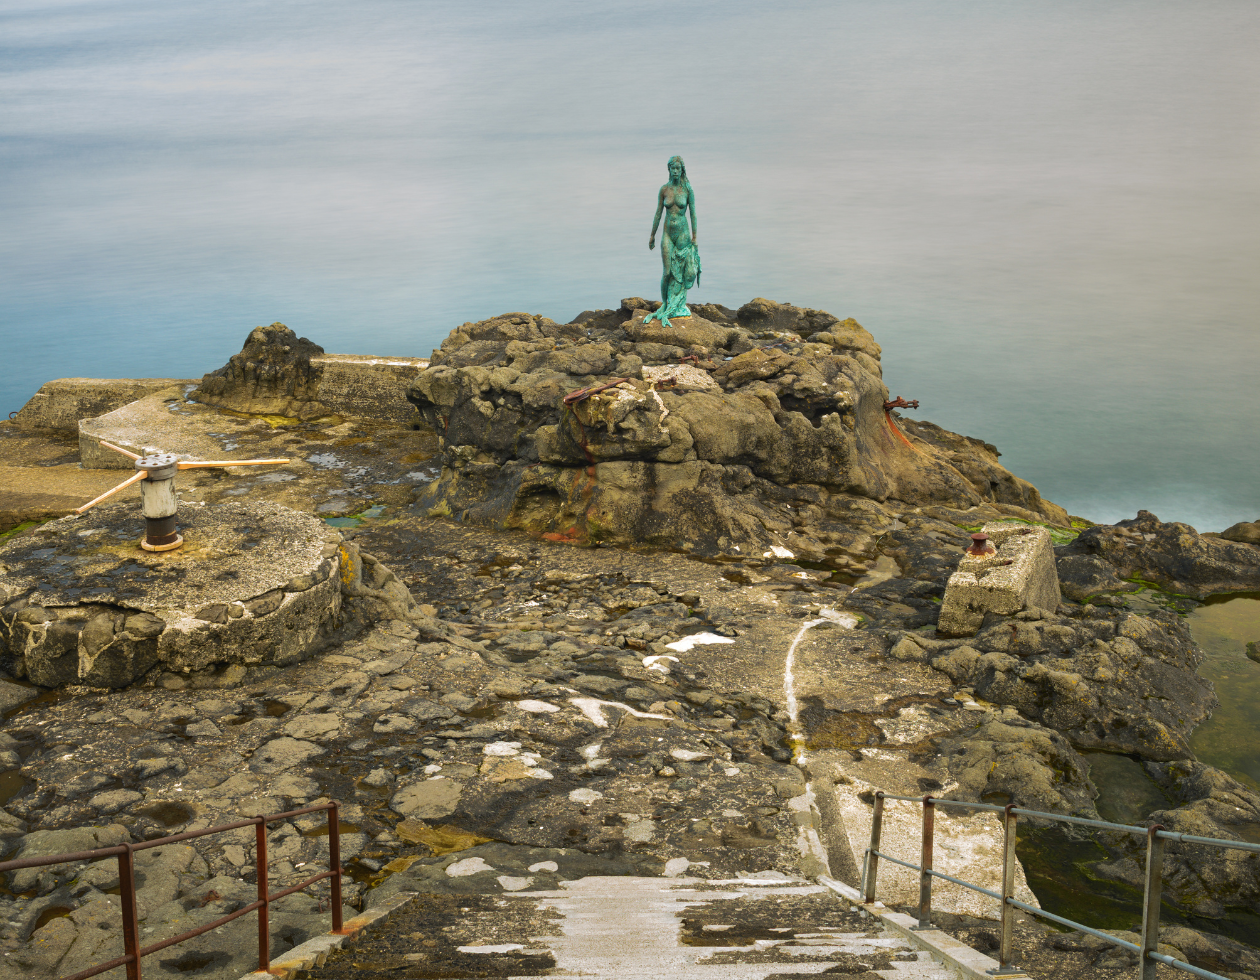 a statue on a rocky area